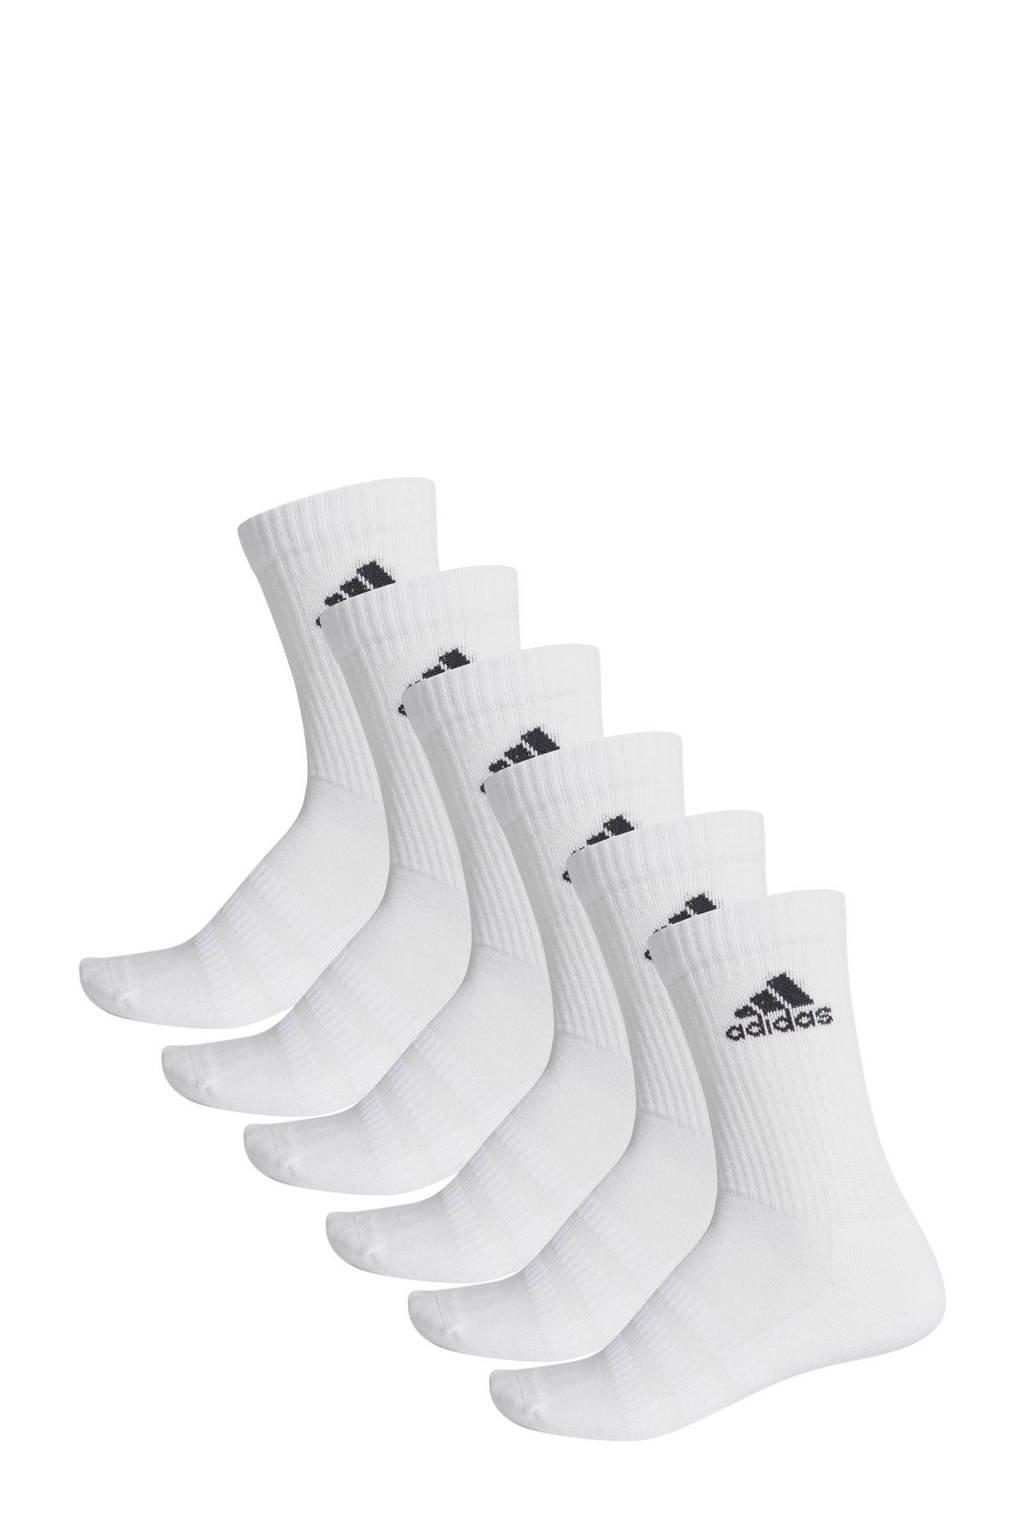 adidas Performance   sportsokken - set van 6 wit, Wit